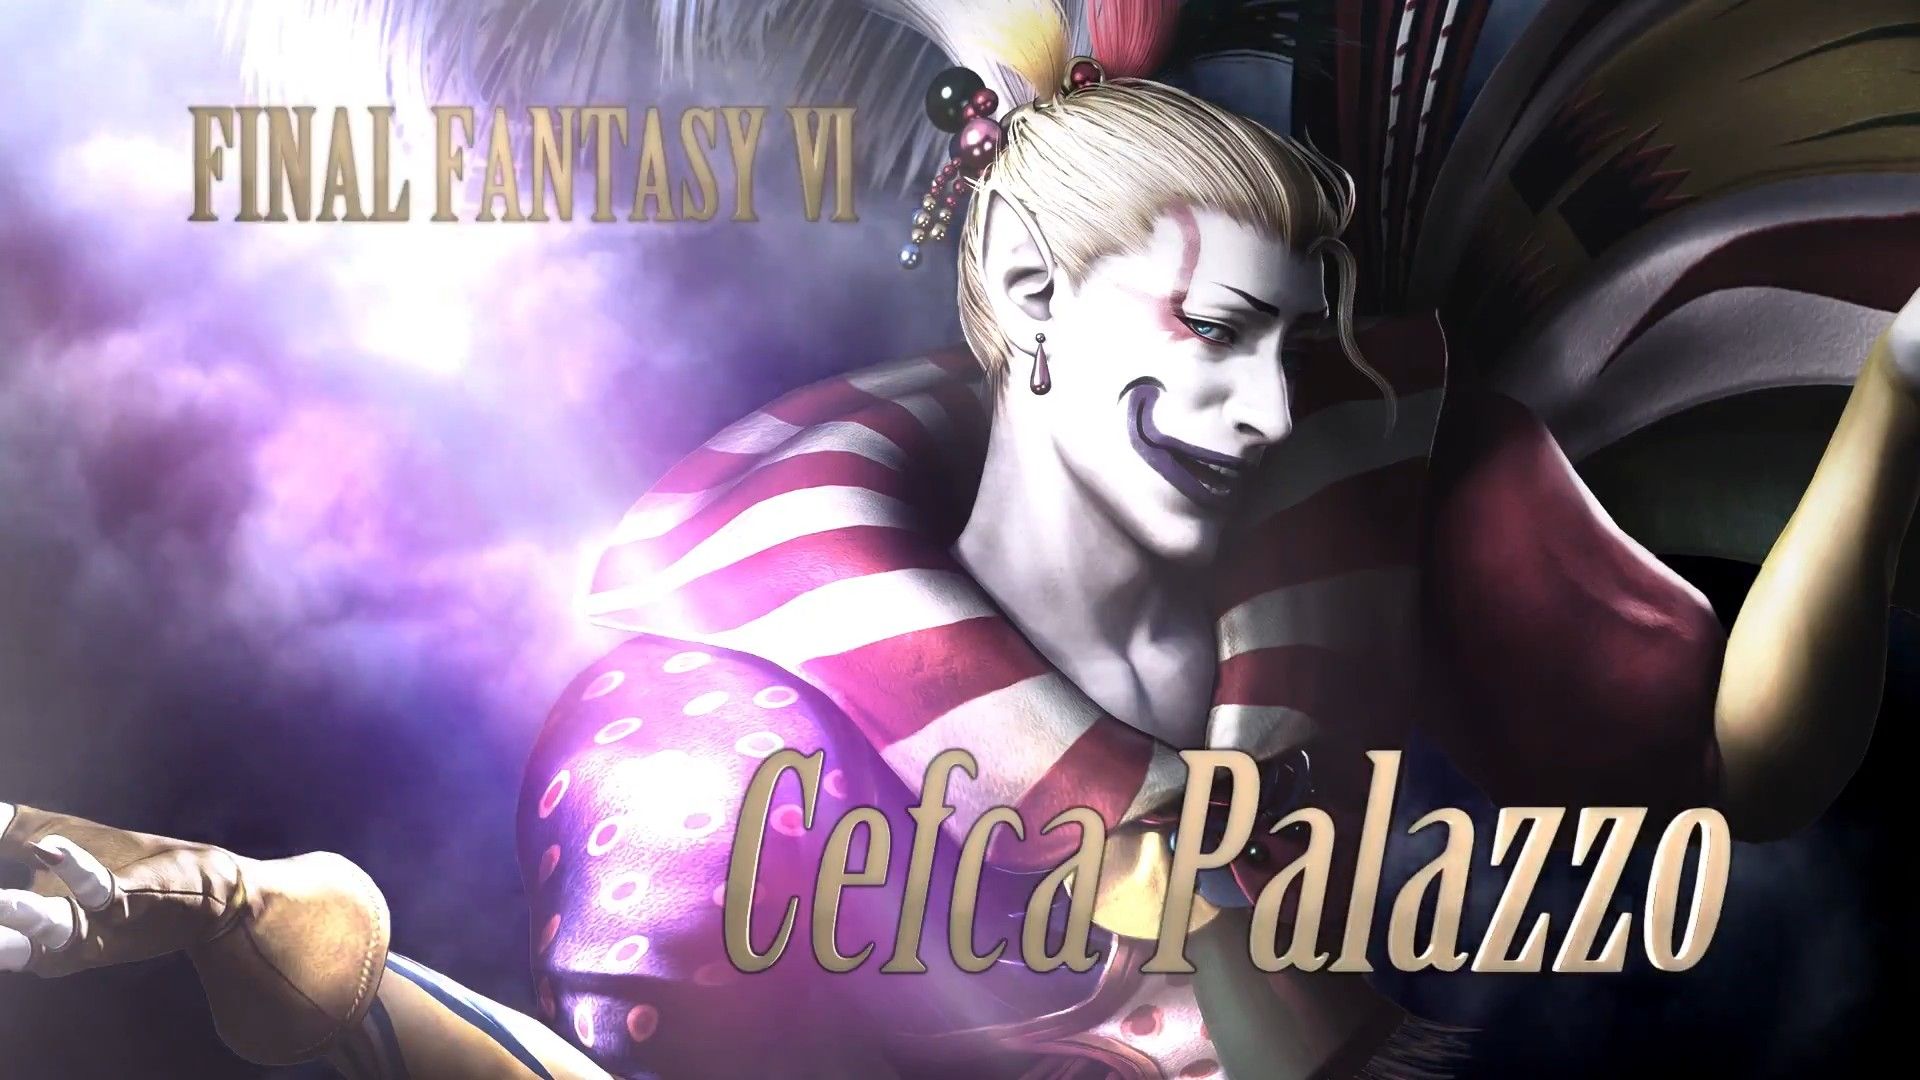 Dissidia final fantasy goes crazy clown with kefka palazzo from final fantasy vi